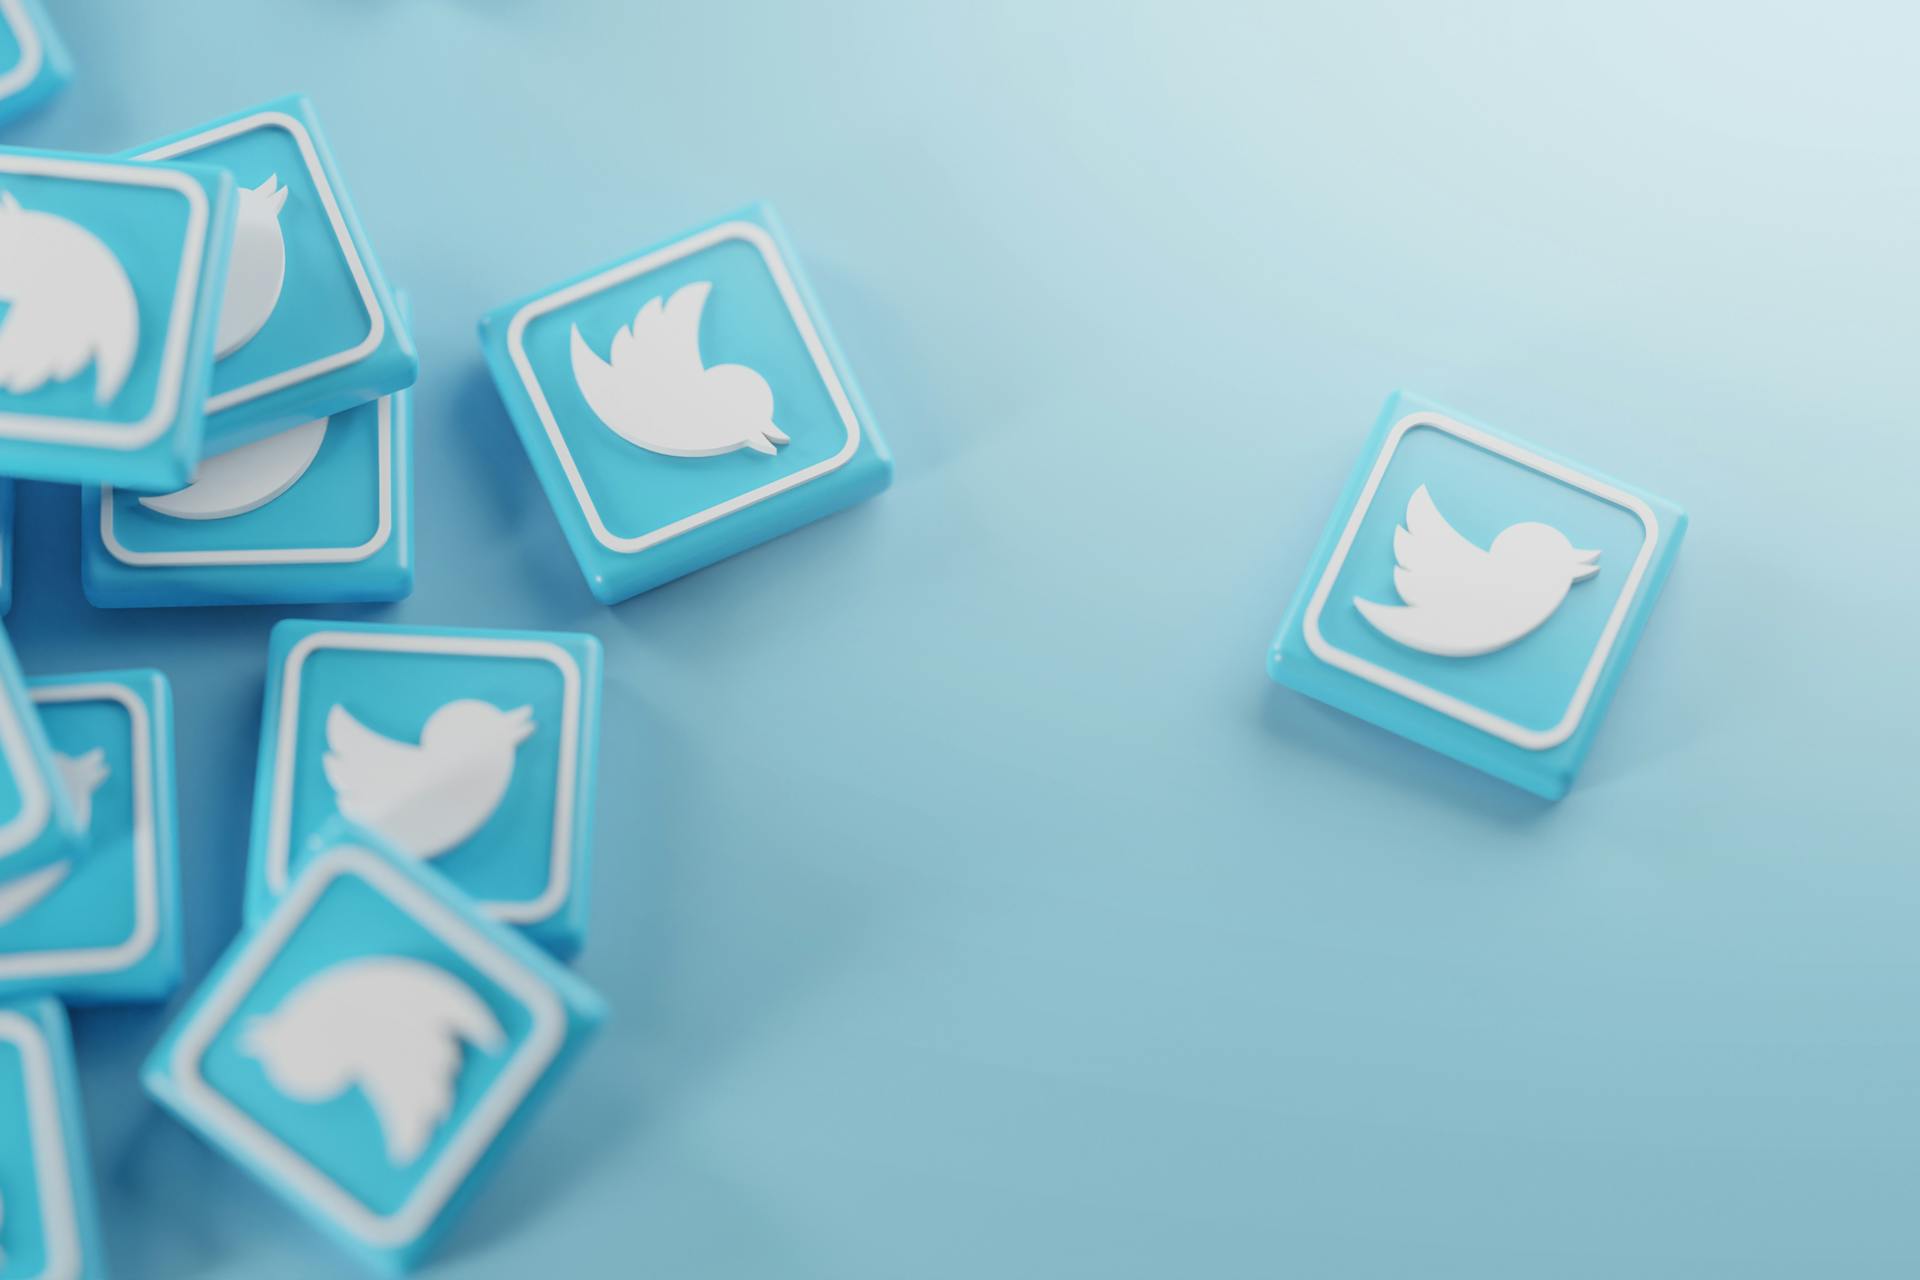 Twitterロゴの正方形のタイルが複数ブルーの背景に配置されている画像